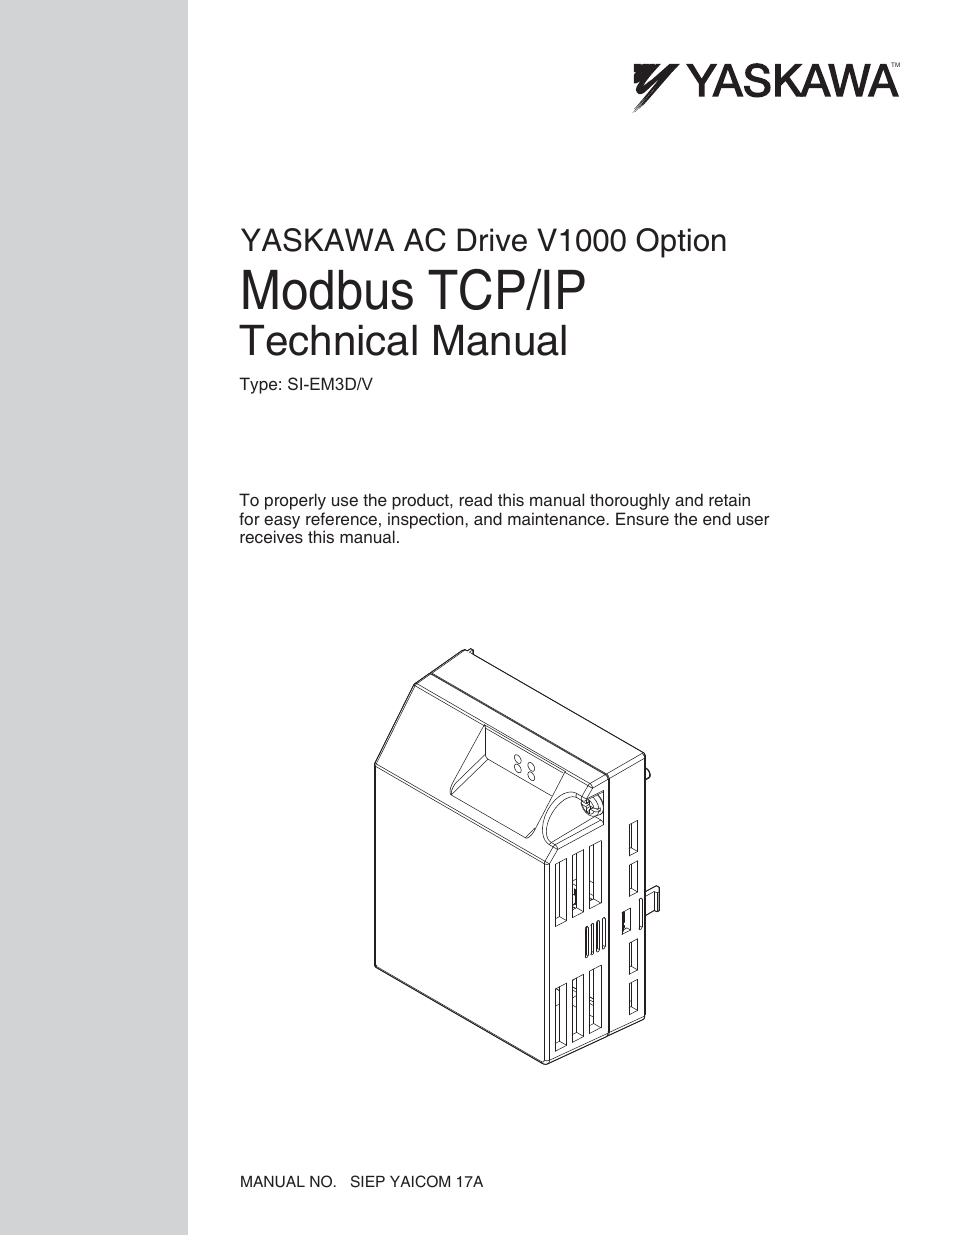 1000-Series Option Dual-Port Modbus TCP/IP SI-EM3D Technical Manual